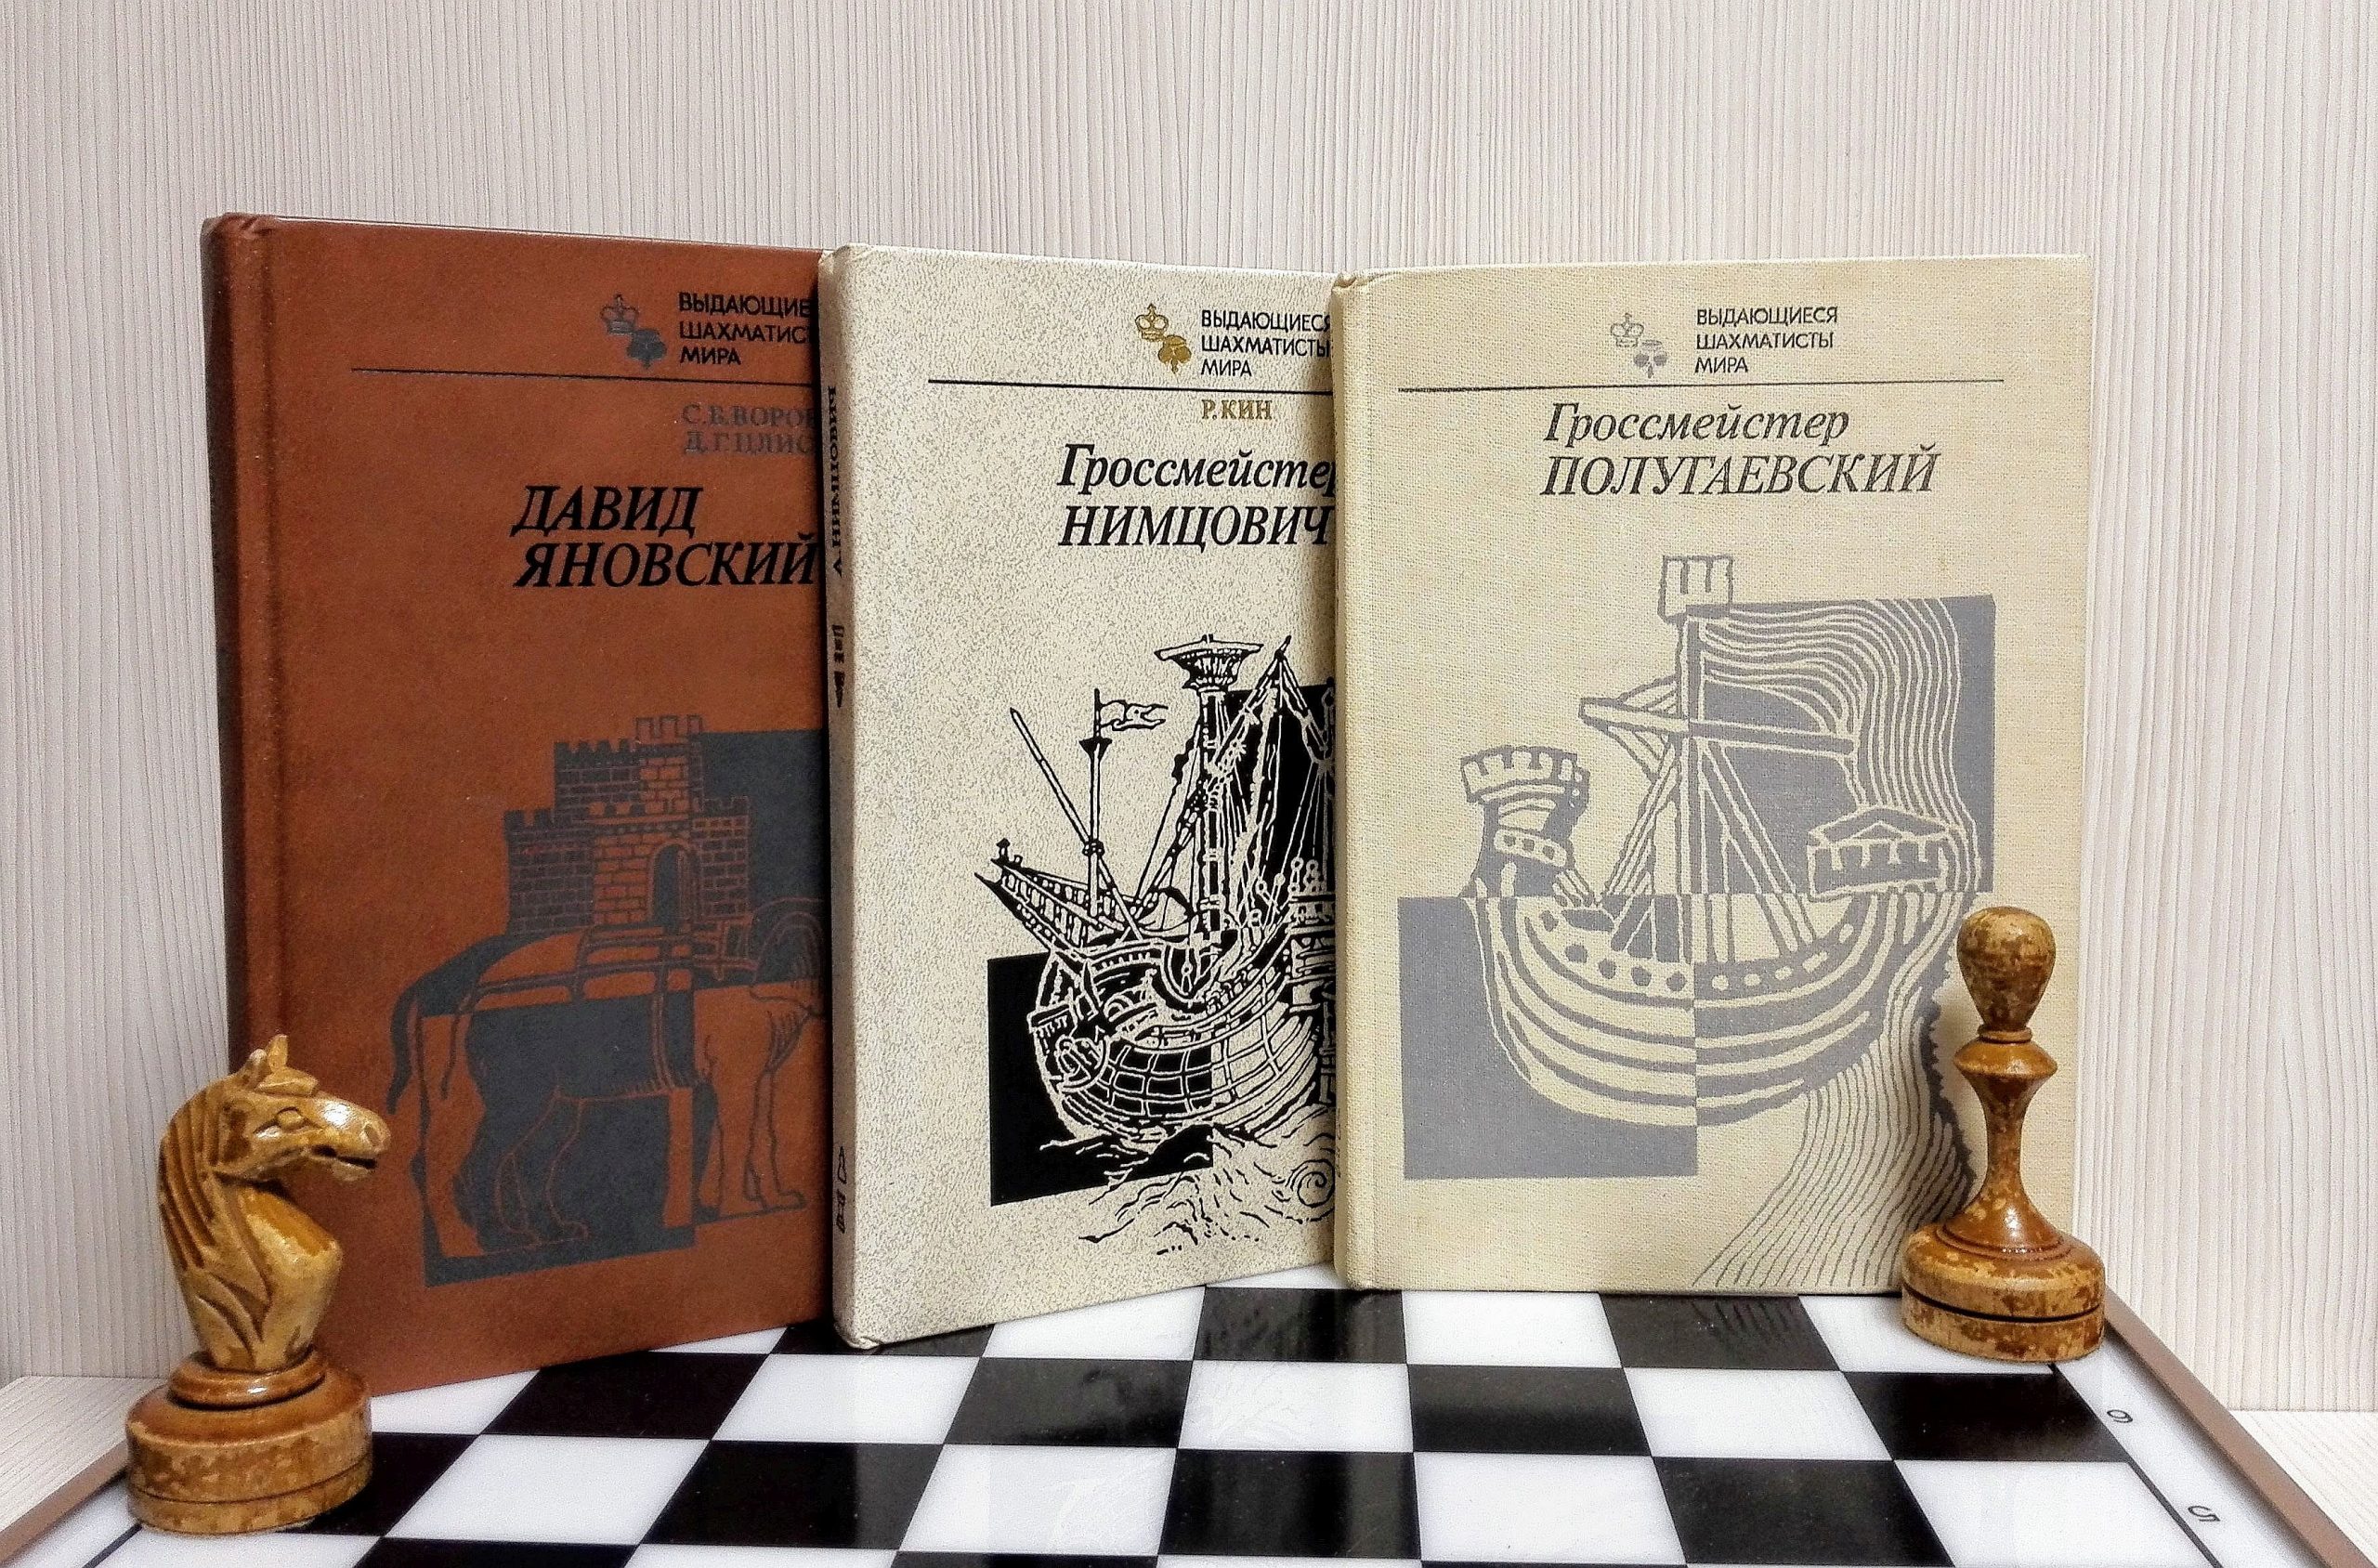 Chess Players, Chess, Books